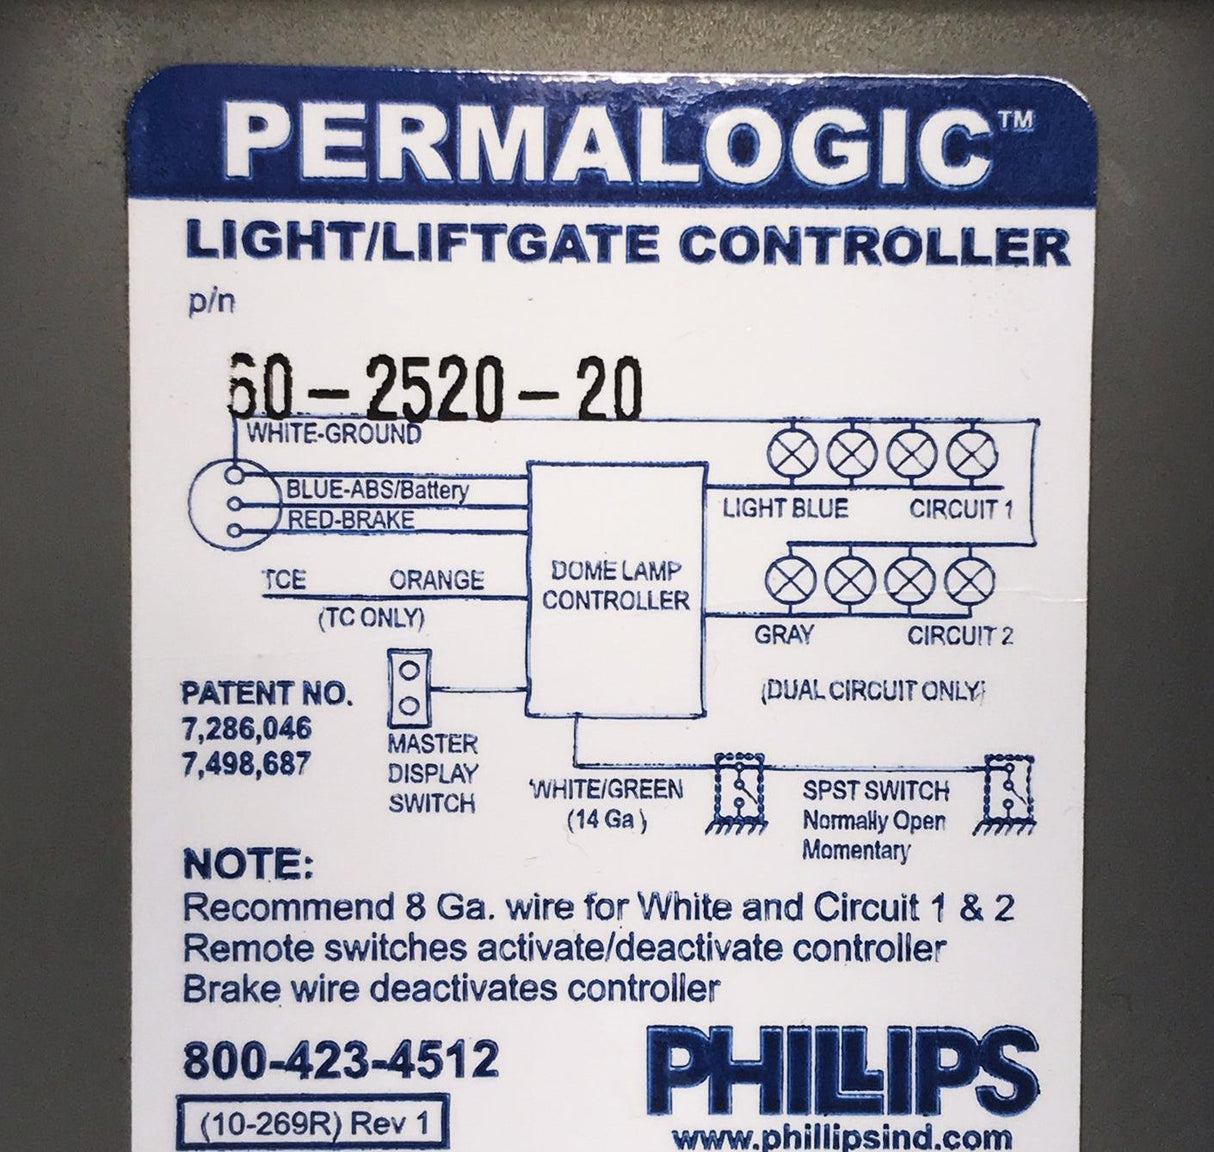 60-2520-20 Phillips® Permalogic Single Circuit Nosebox Dome Lamp Controller - Truck To Trailer